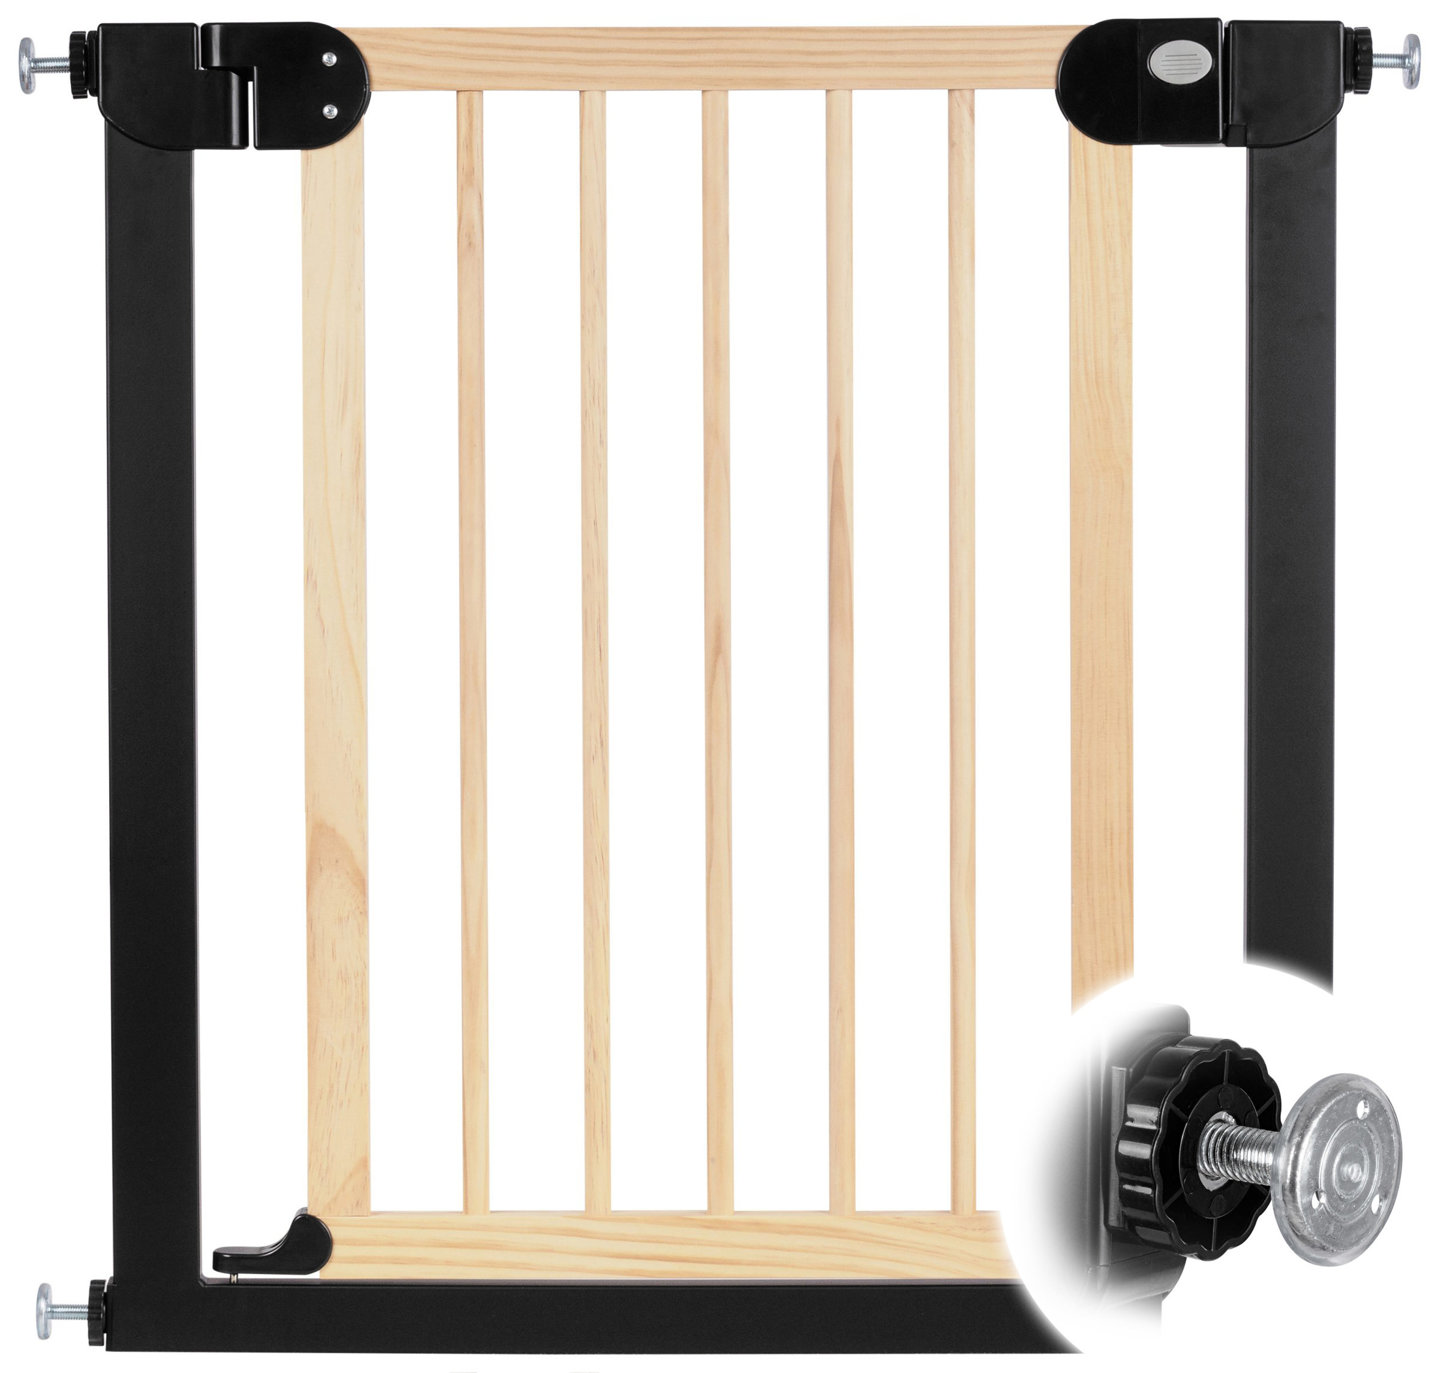 Wooden pressure fit safety gate - safety railing - width: 76...83cm